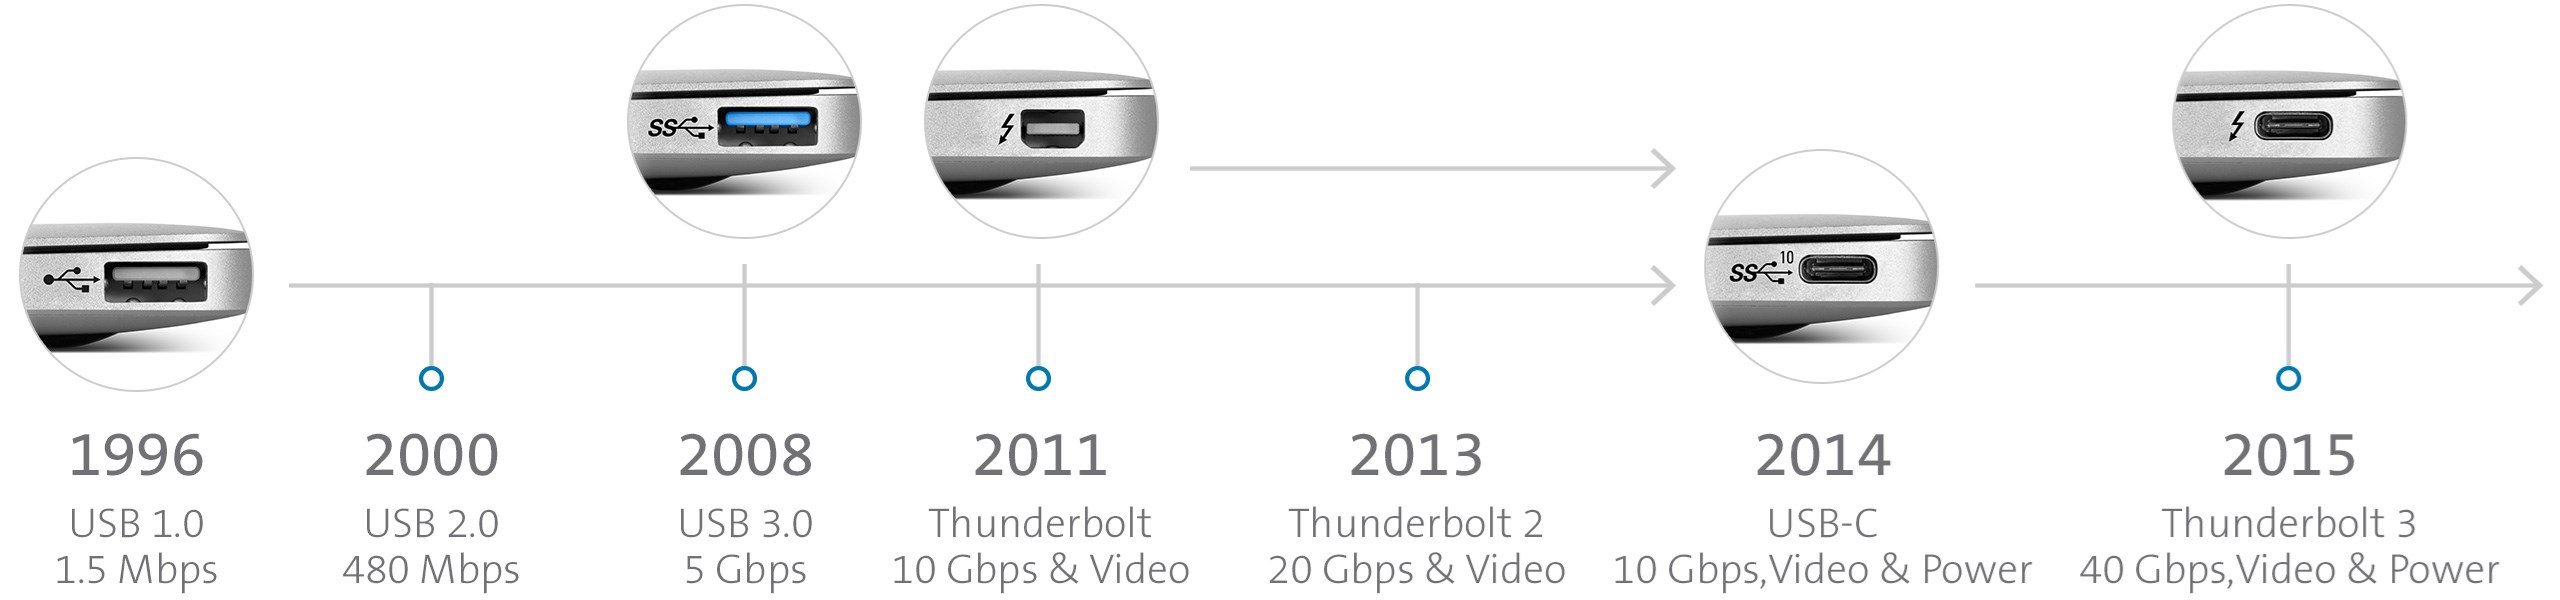 USB adaptations timeline